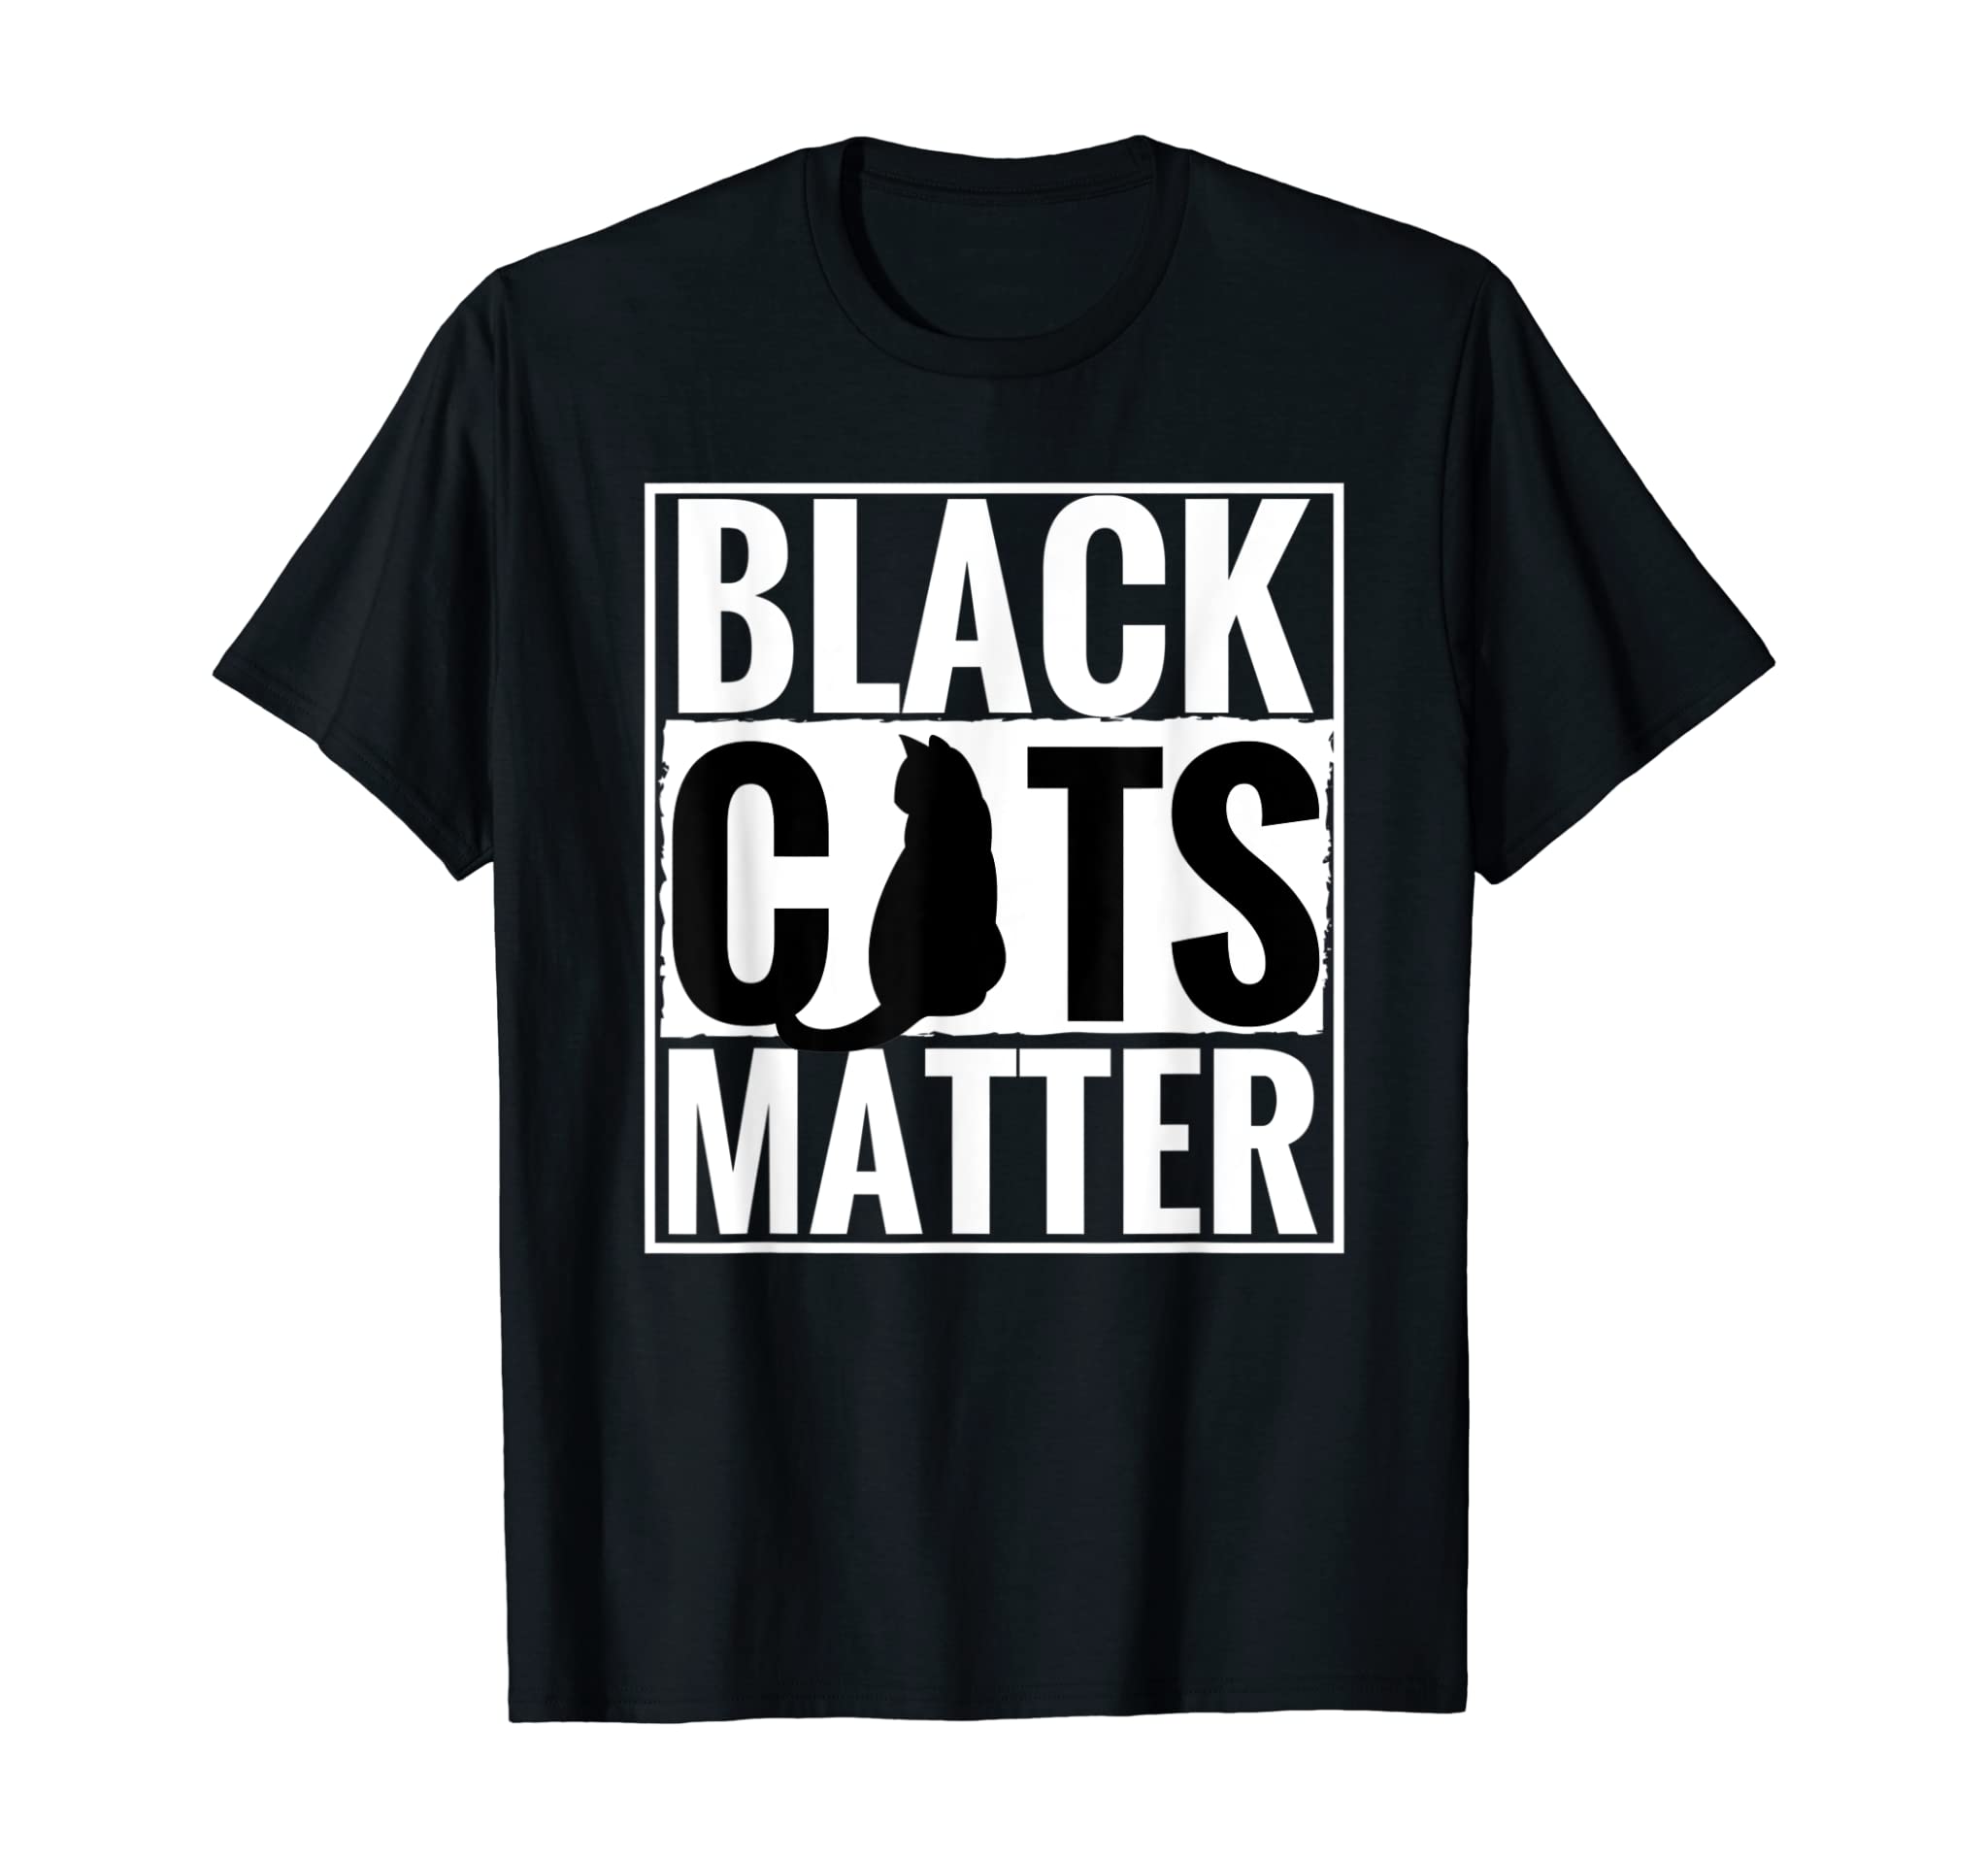 Black Cats Matter Funny Parody Blm Rescue Kittens Tee Shirt ...